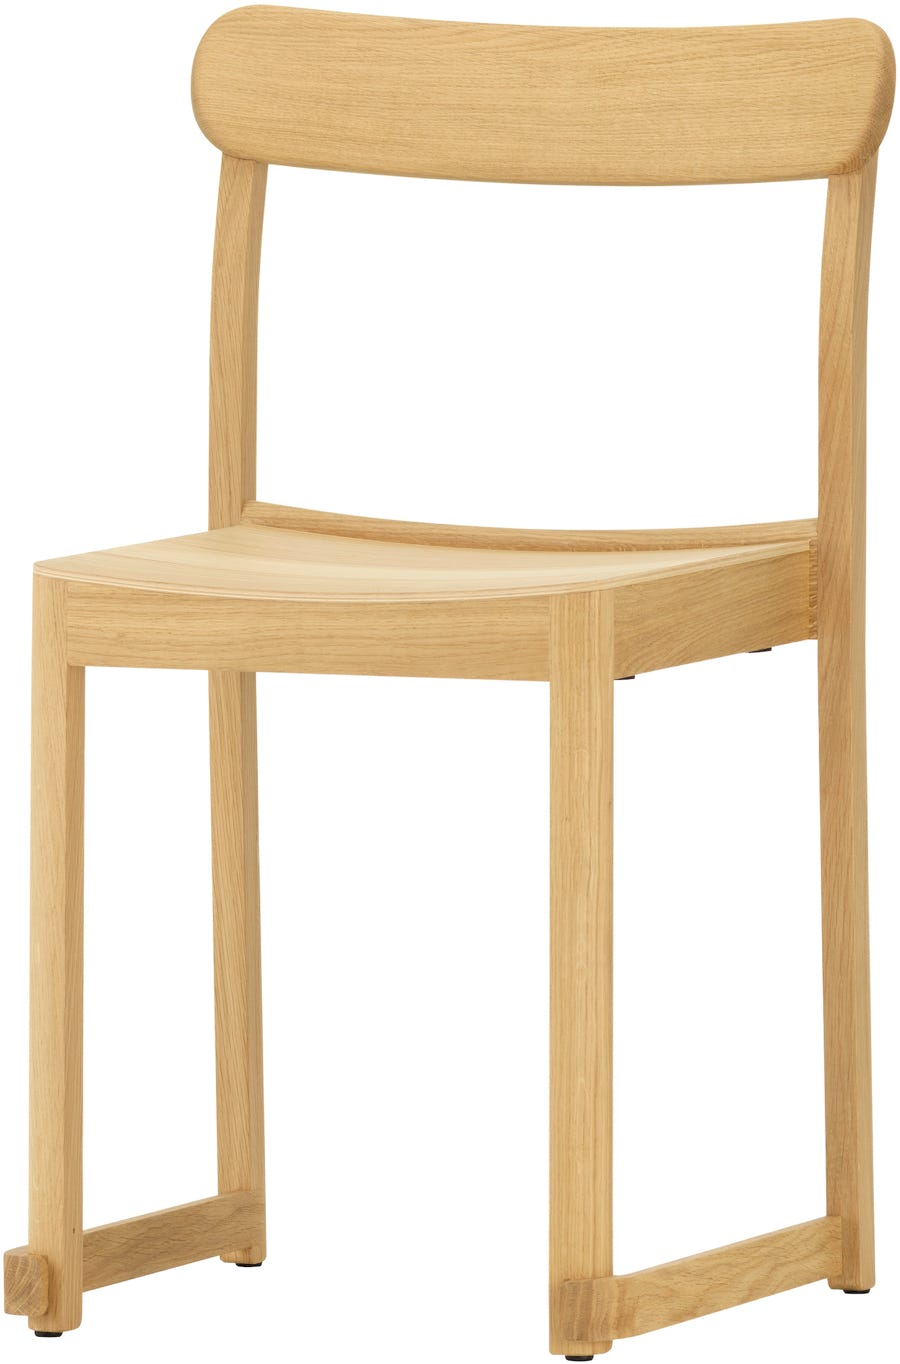 ATELIER Chairs & bar stool TAF Studio